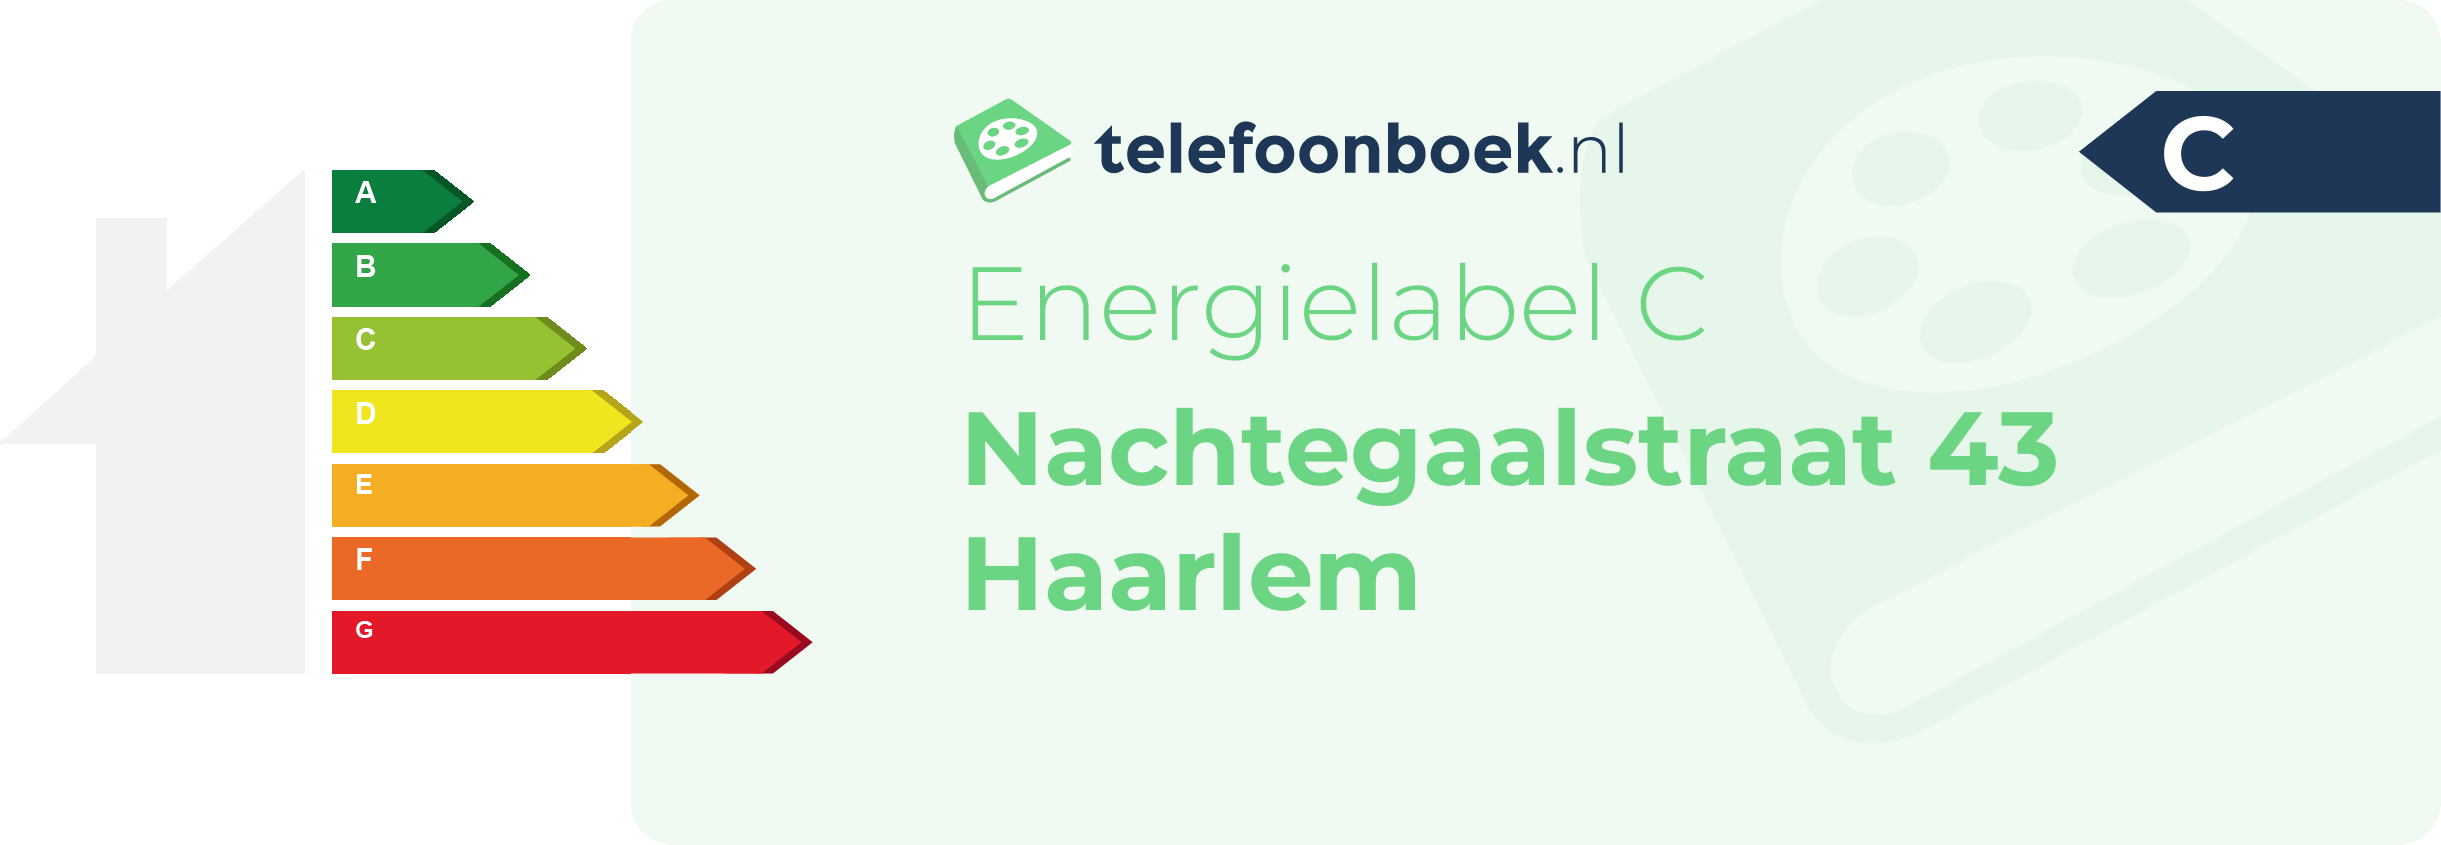 Energielabel Nachtegaalstraat 43 Haarlem